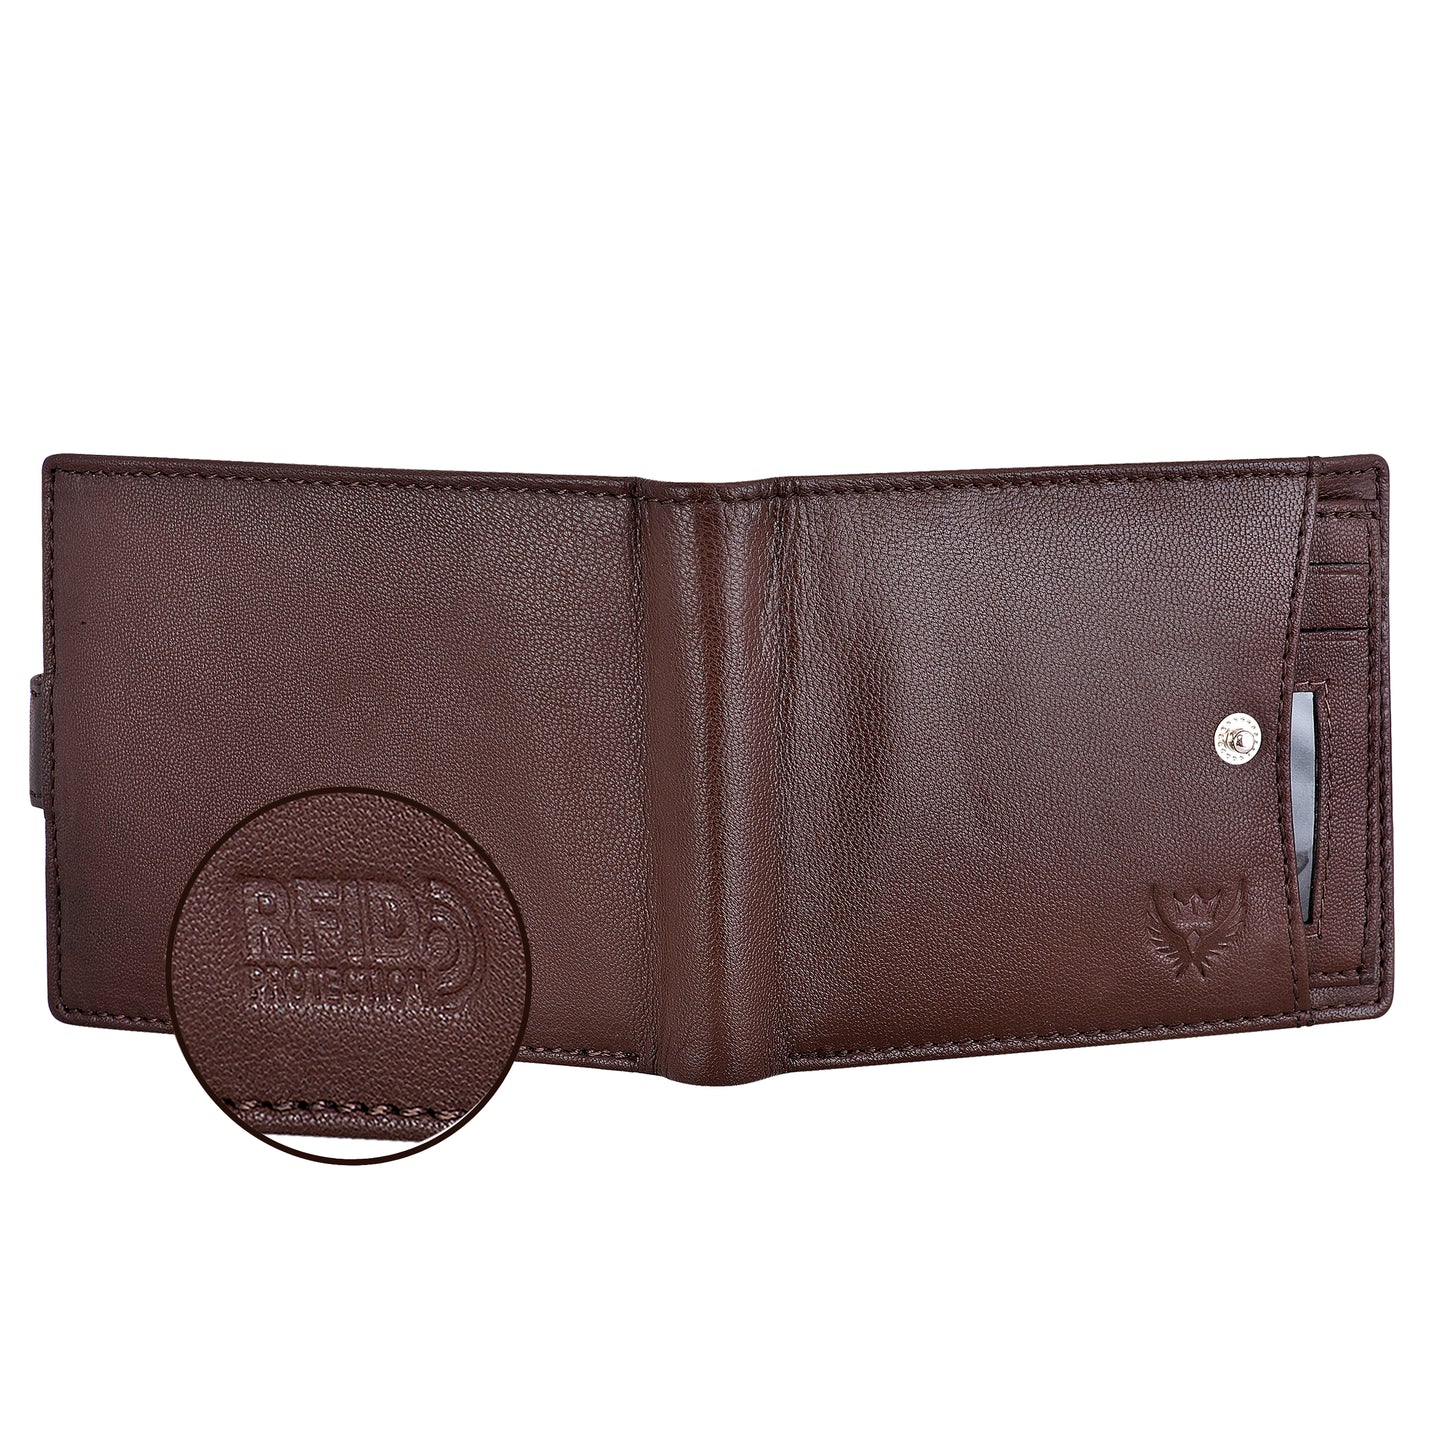 Lorenz Bi-Fold Dark Brown RFID Blocking Leather Wallet for Men with External Card Holder & Coin Pocket Feature